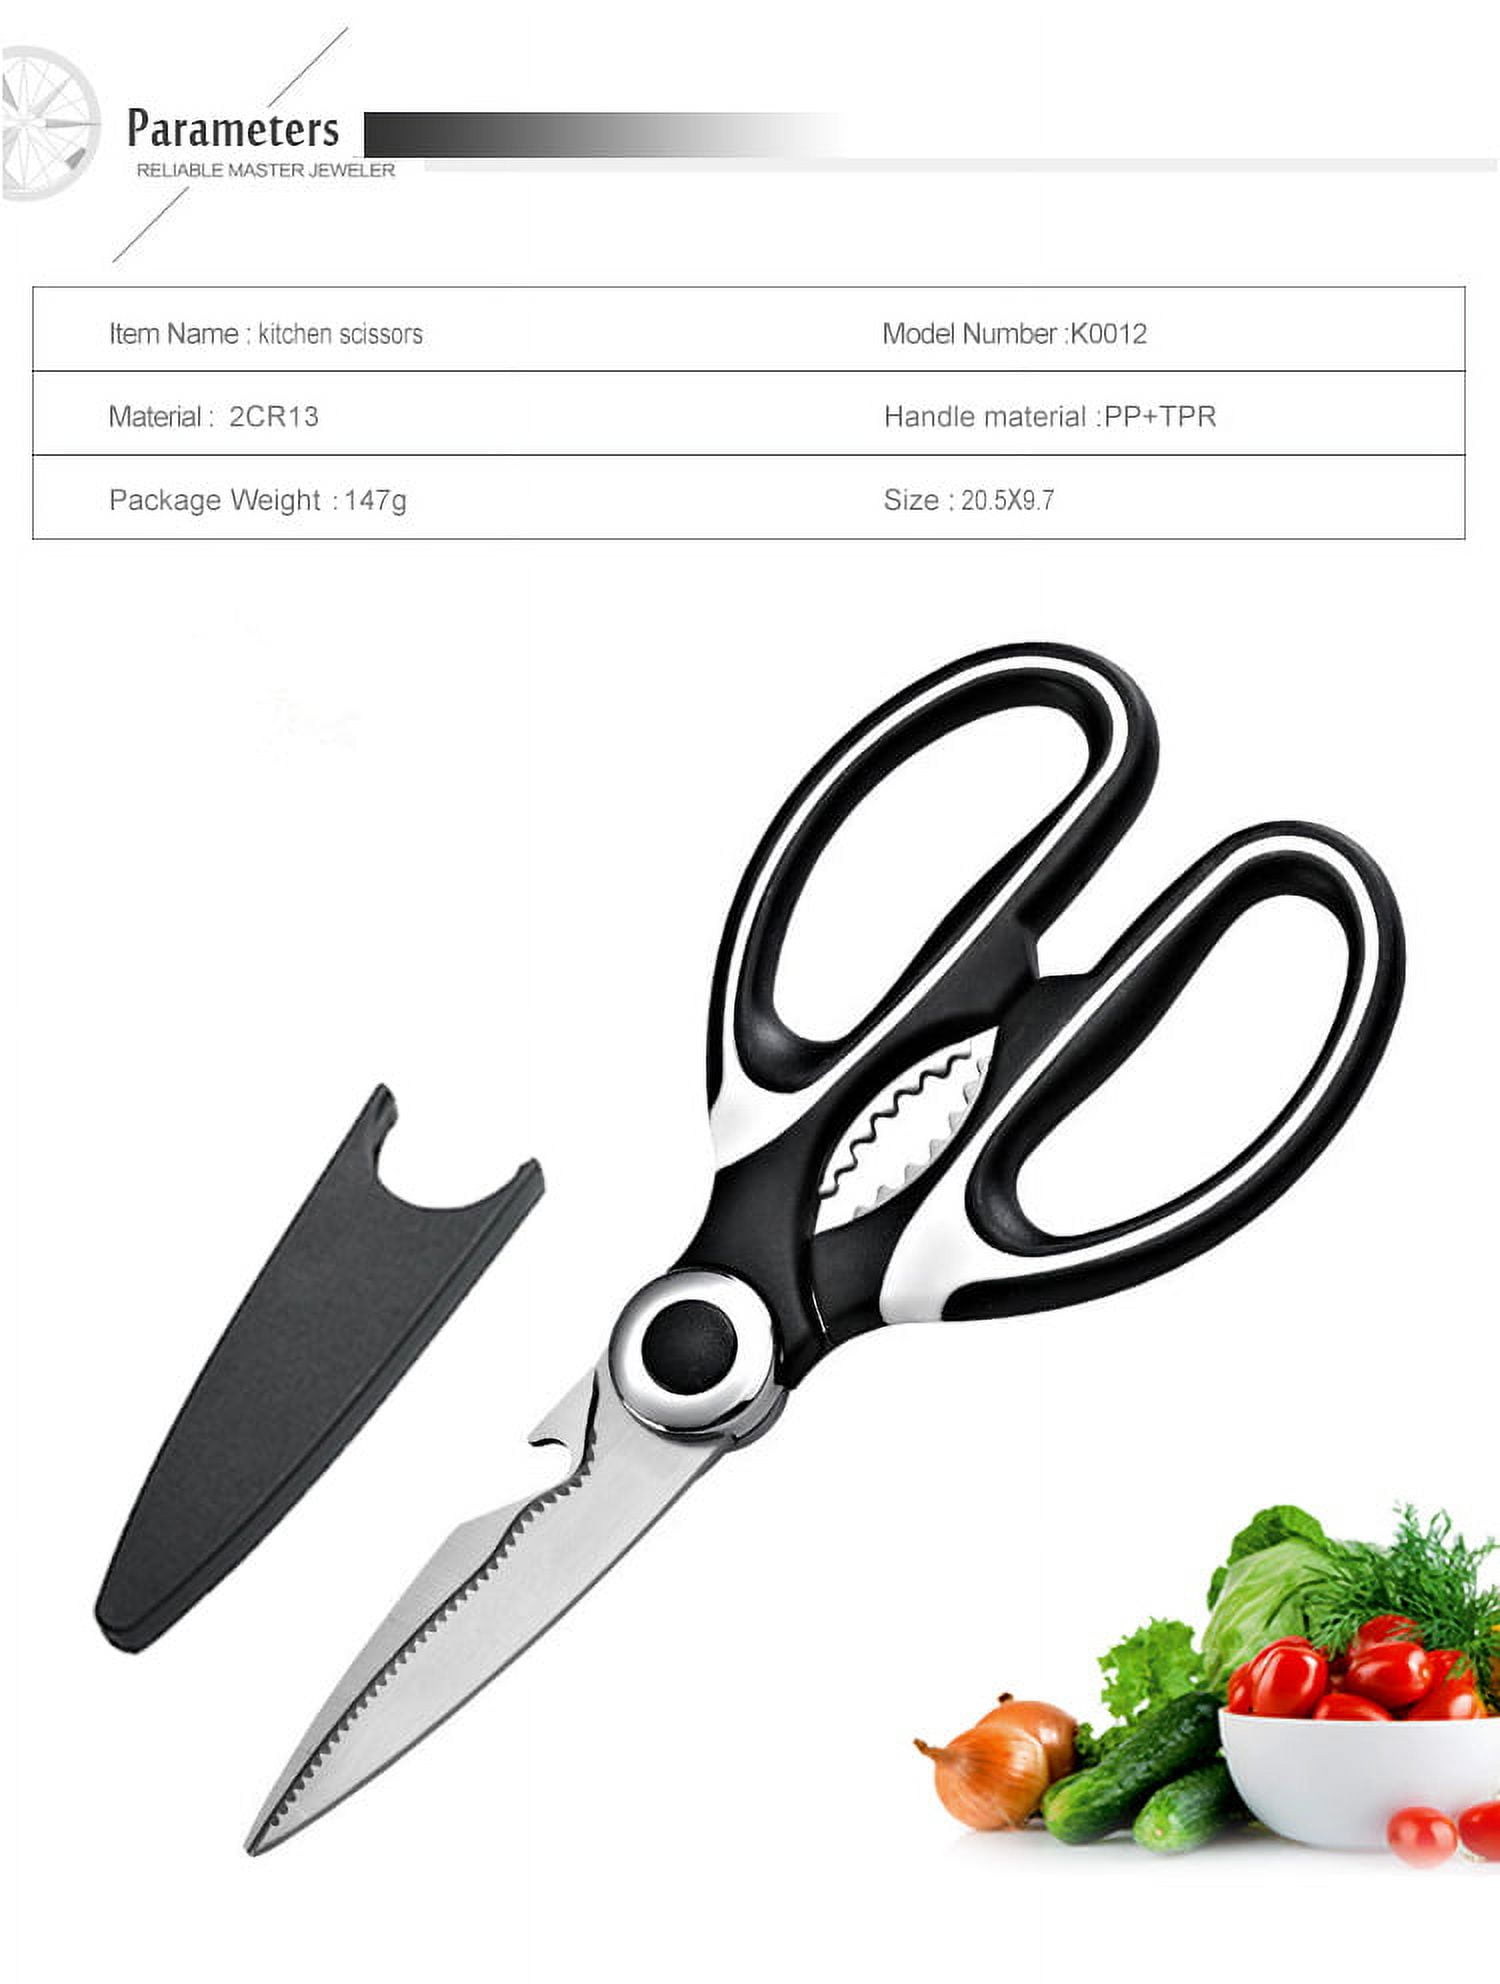 Sairps Kitchen Scissors Woman Use Multi-purpose scissors Heavy